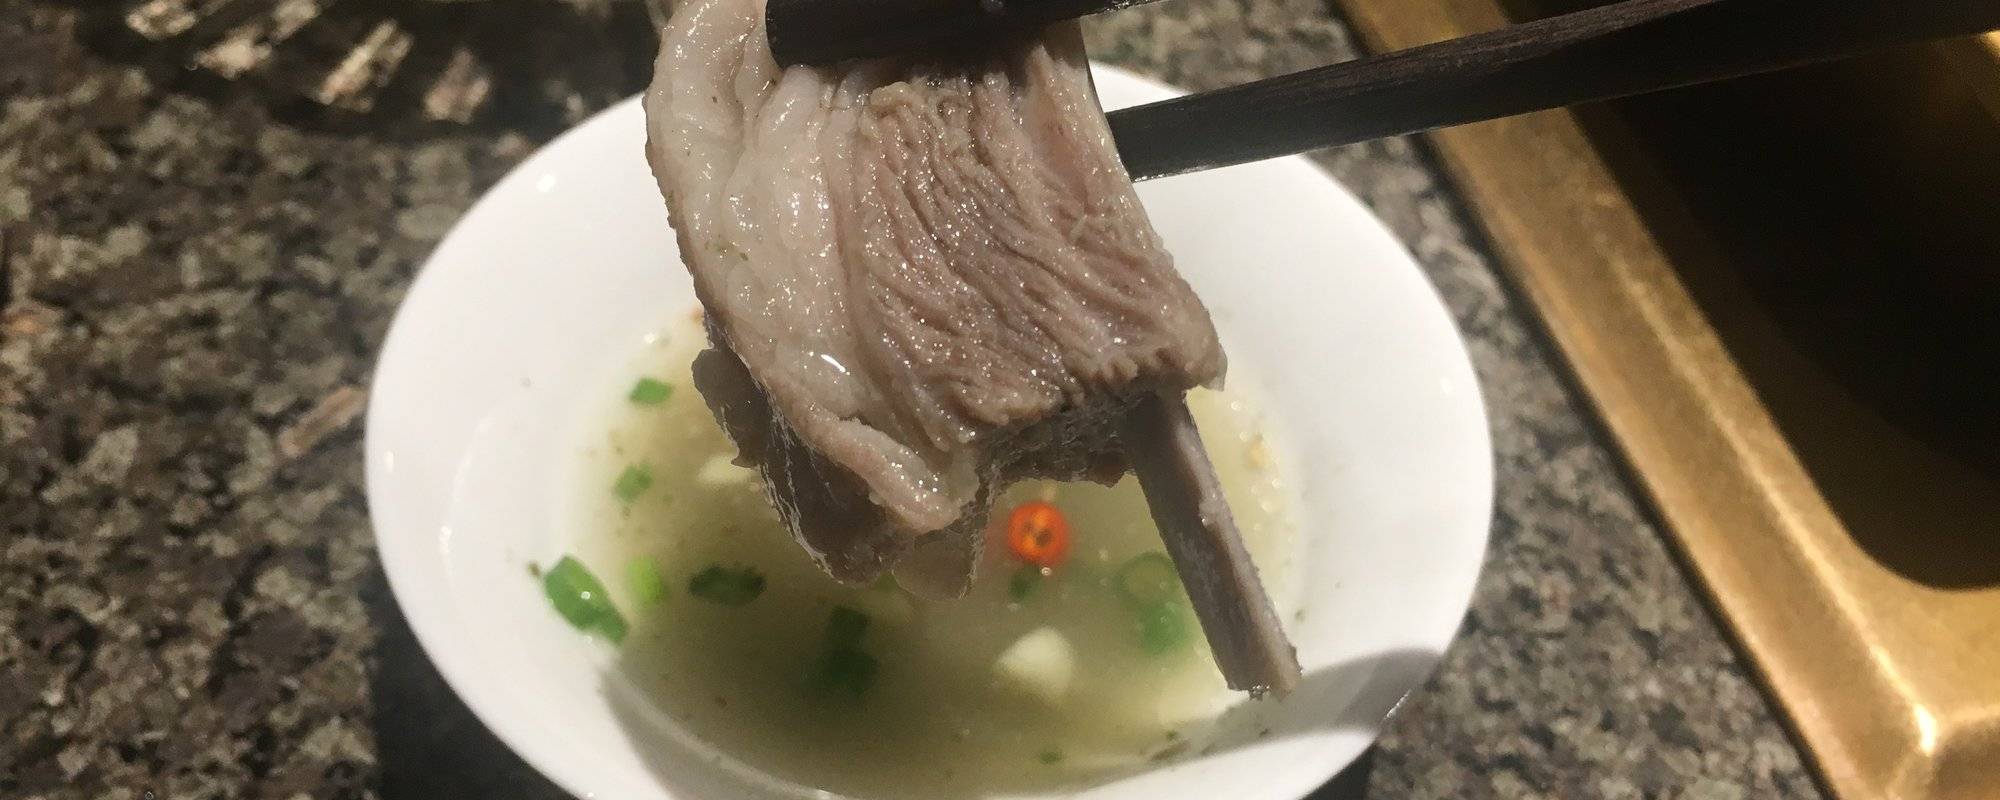 Travel to Beijing (4) - Instant-boiled mutton 北京之旅 (4) - 涮羊肉